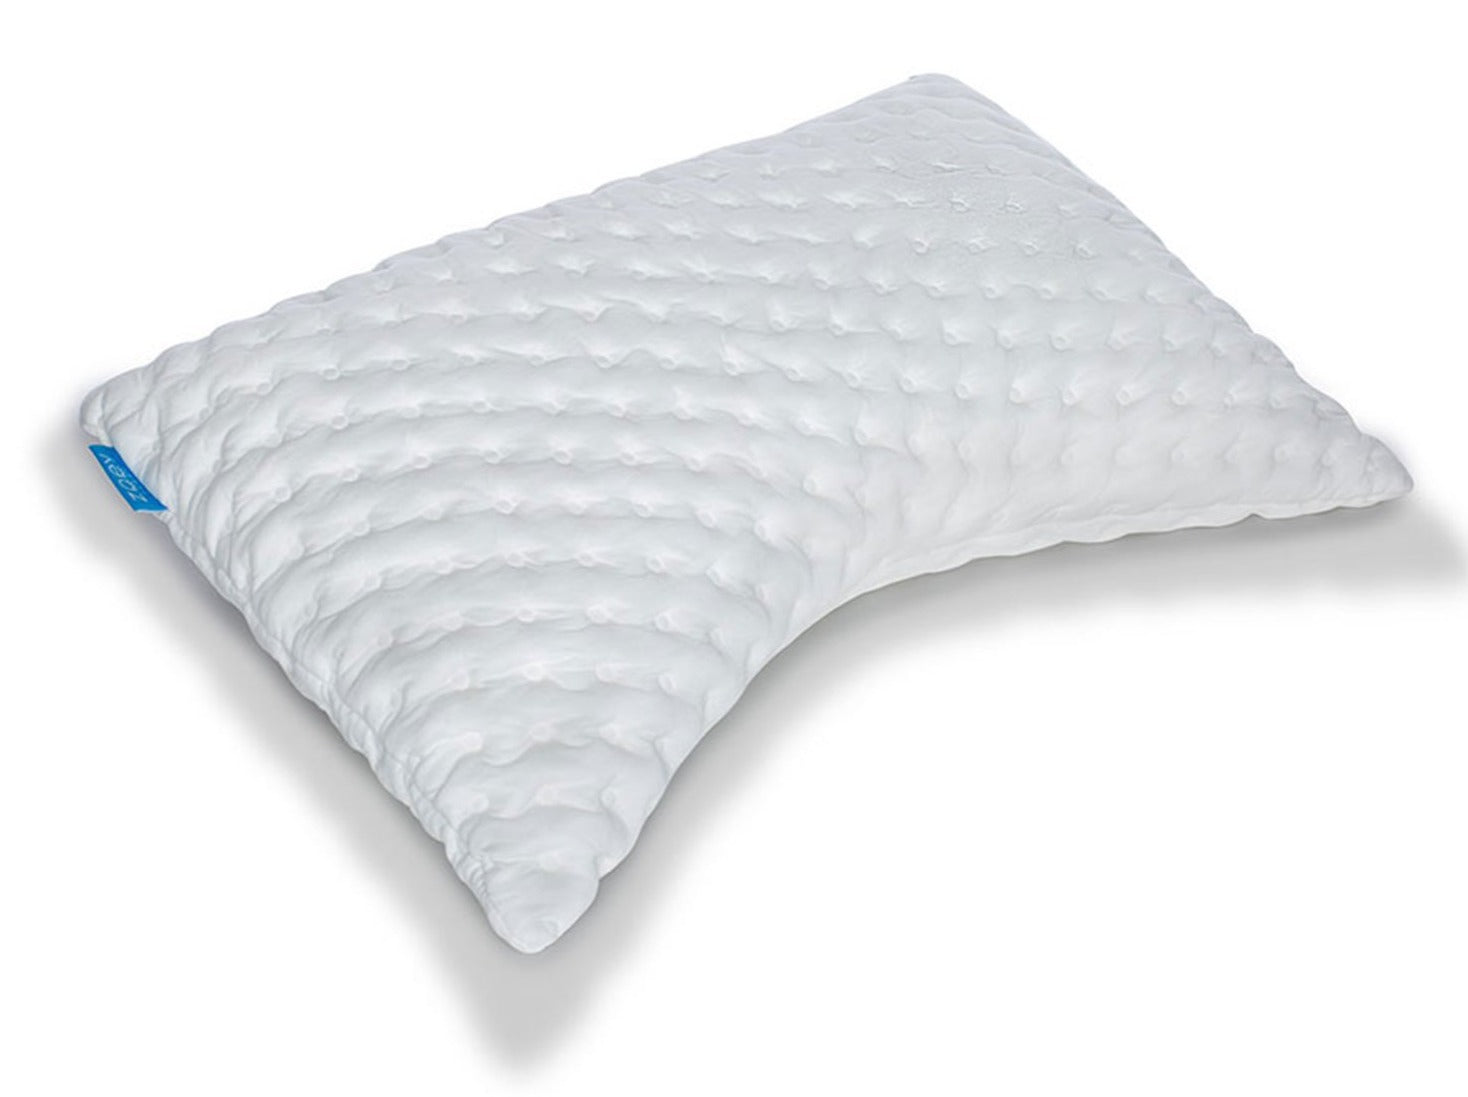 Zoey Curve Pillow – Zoey Sleep